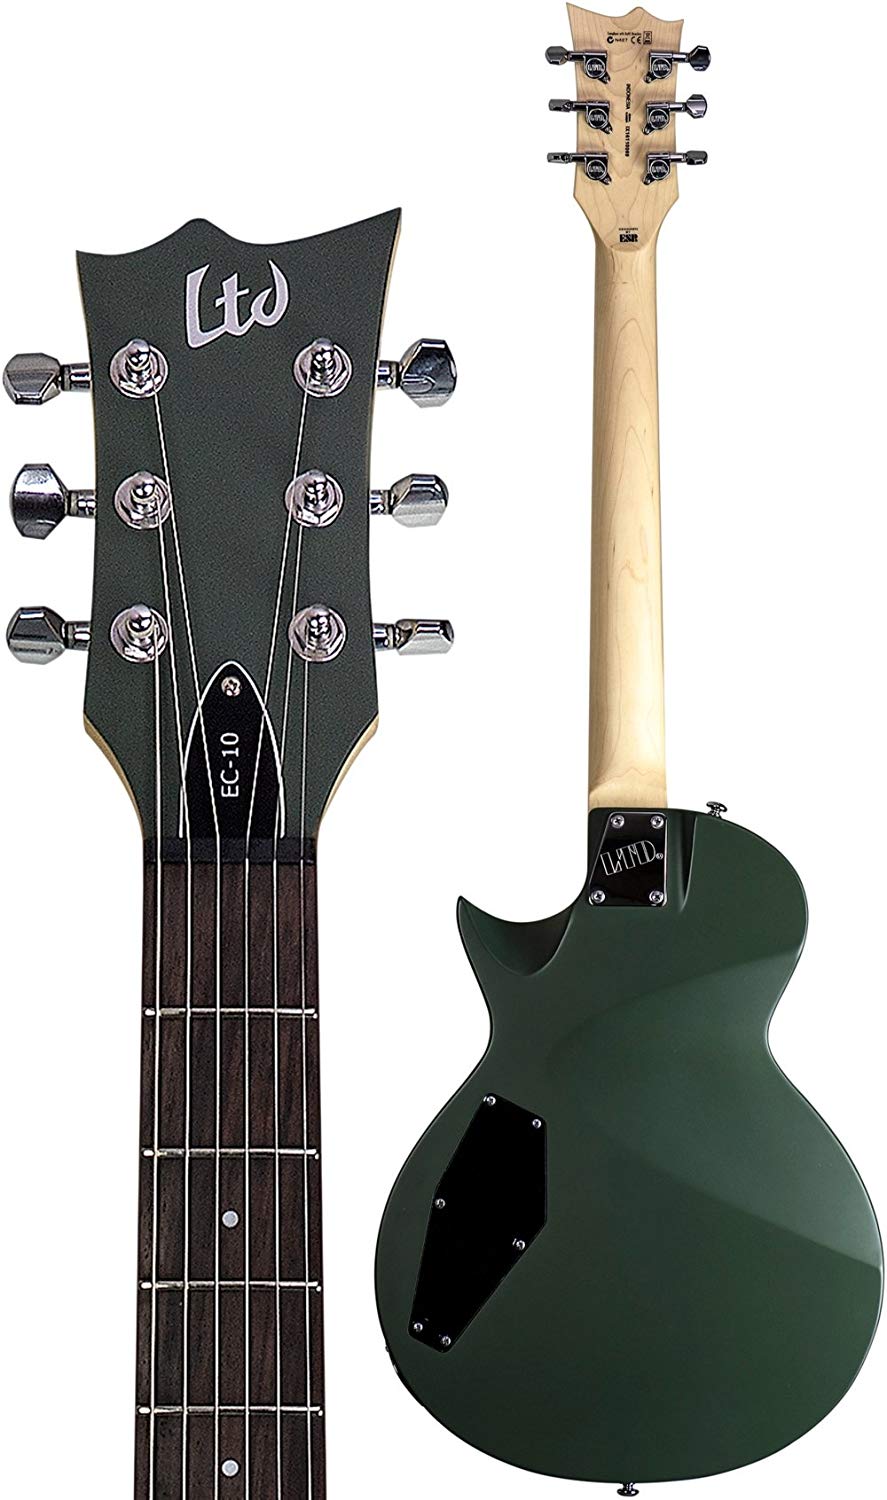 Ltd Ec-10 Kit Hh Ht Rw +housse - Black - Enkel gesneden elektrische gitaar - Variation 6